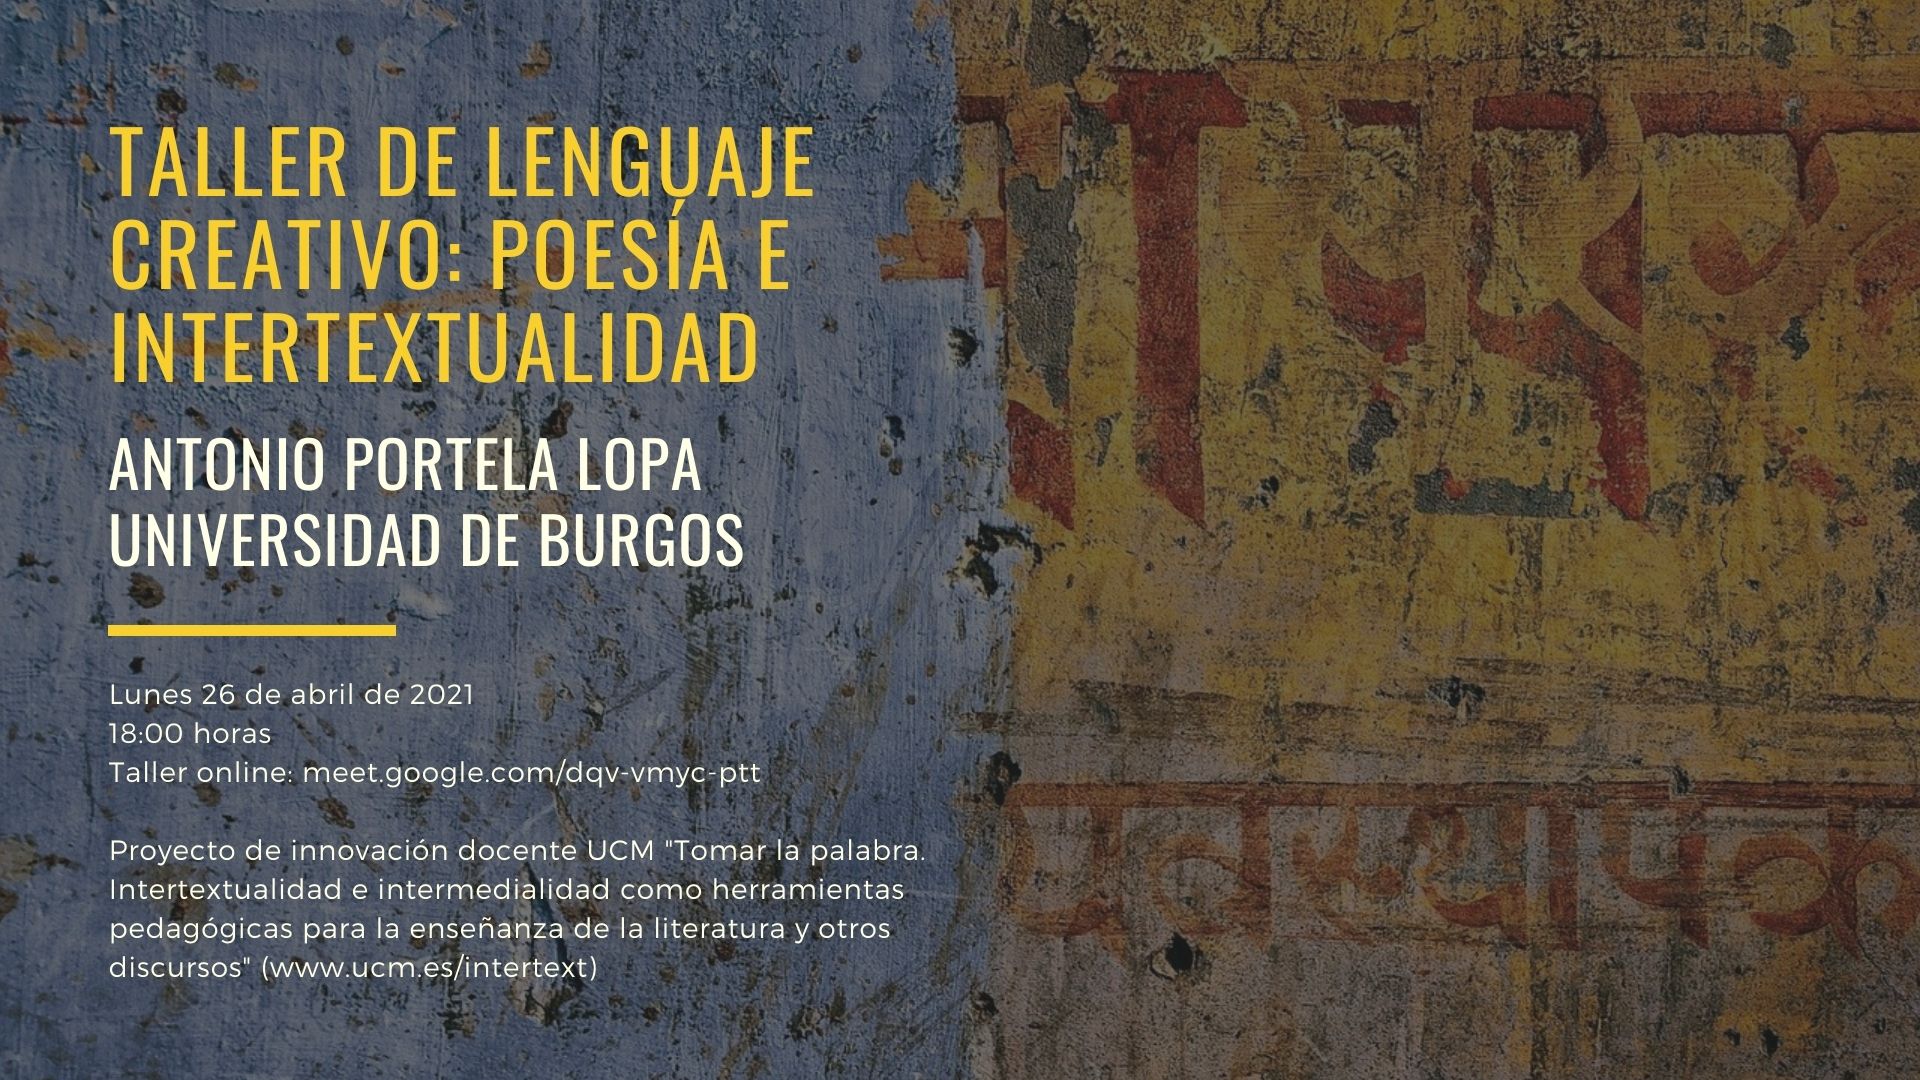 Antonio Portela Lopa, "Taller de lenguaje creativo: poesía e intertextualidad" - 1